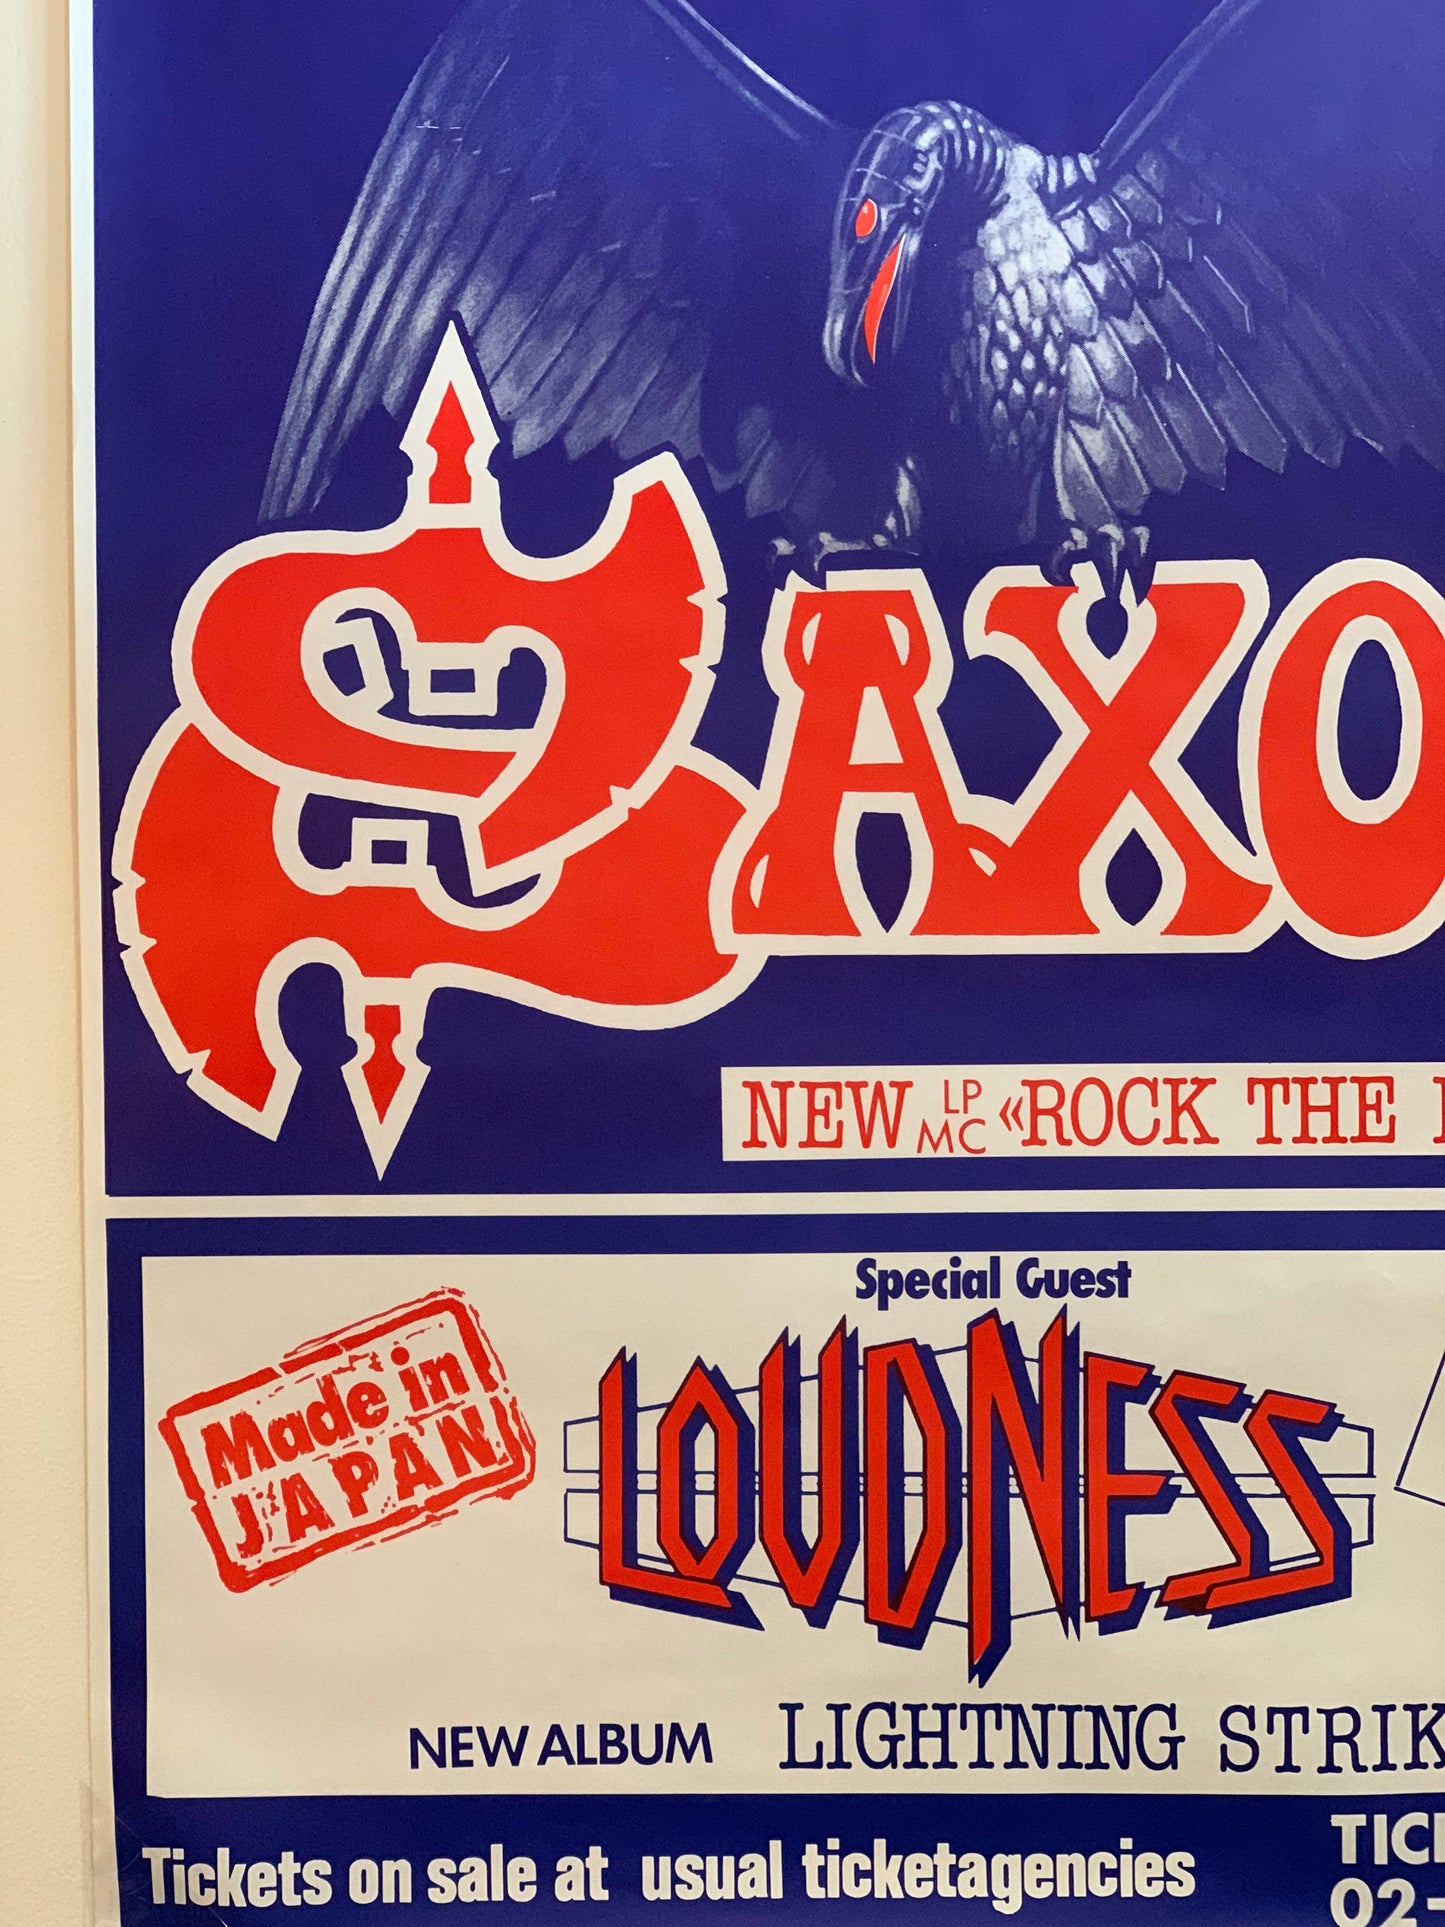 1986 Saxon Rock The Nations Tour w/ Loudness Vorst National, Belgium Show Poster